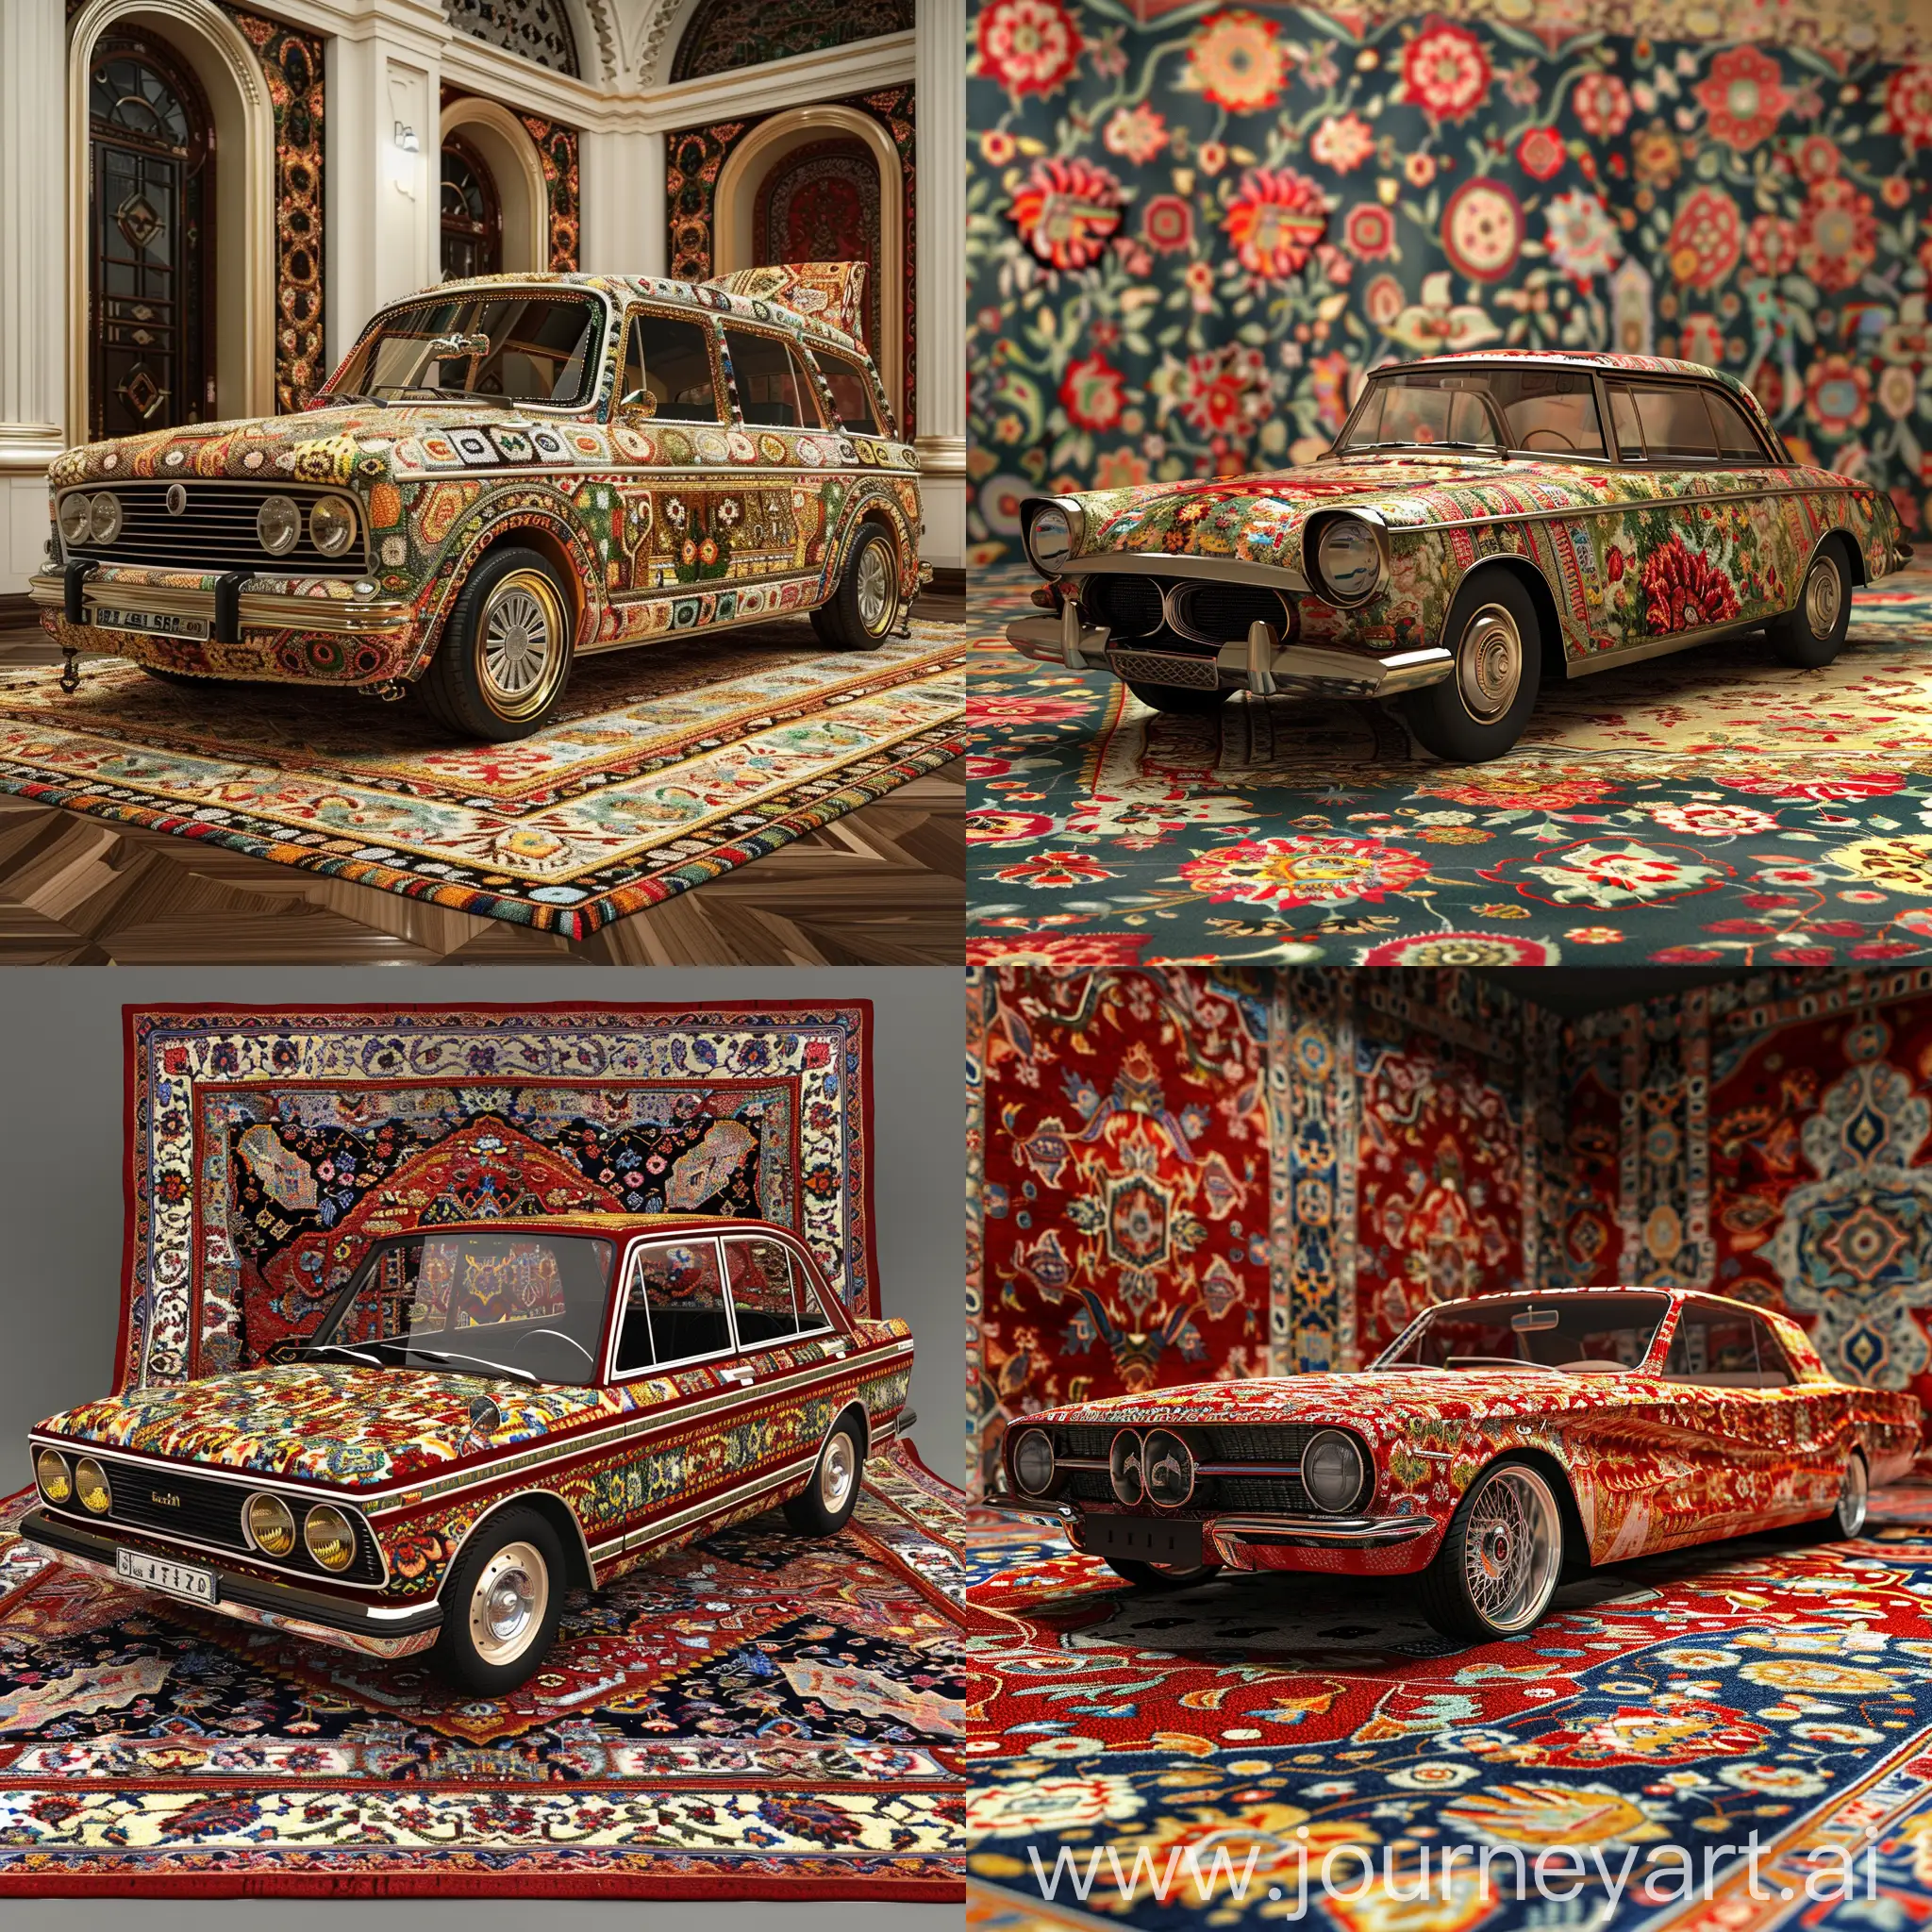 Iran-Khodro-Car-Design-with-Persian-Carpet-Pattern-in-Natural-Setting